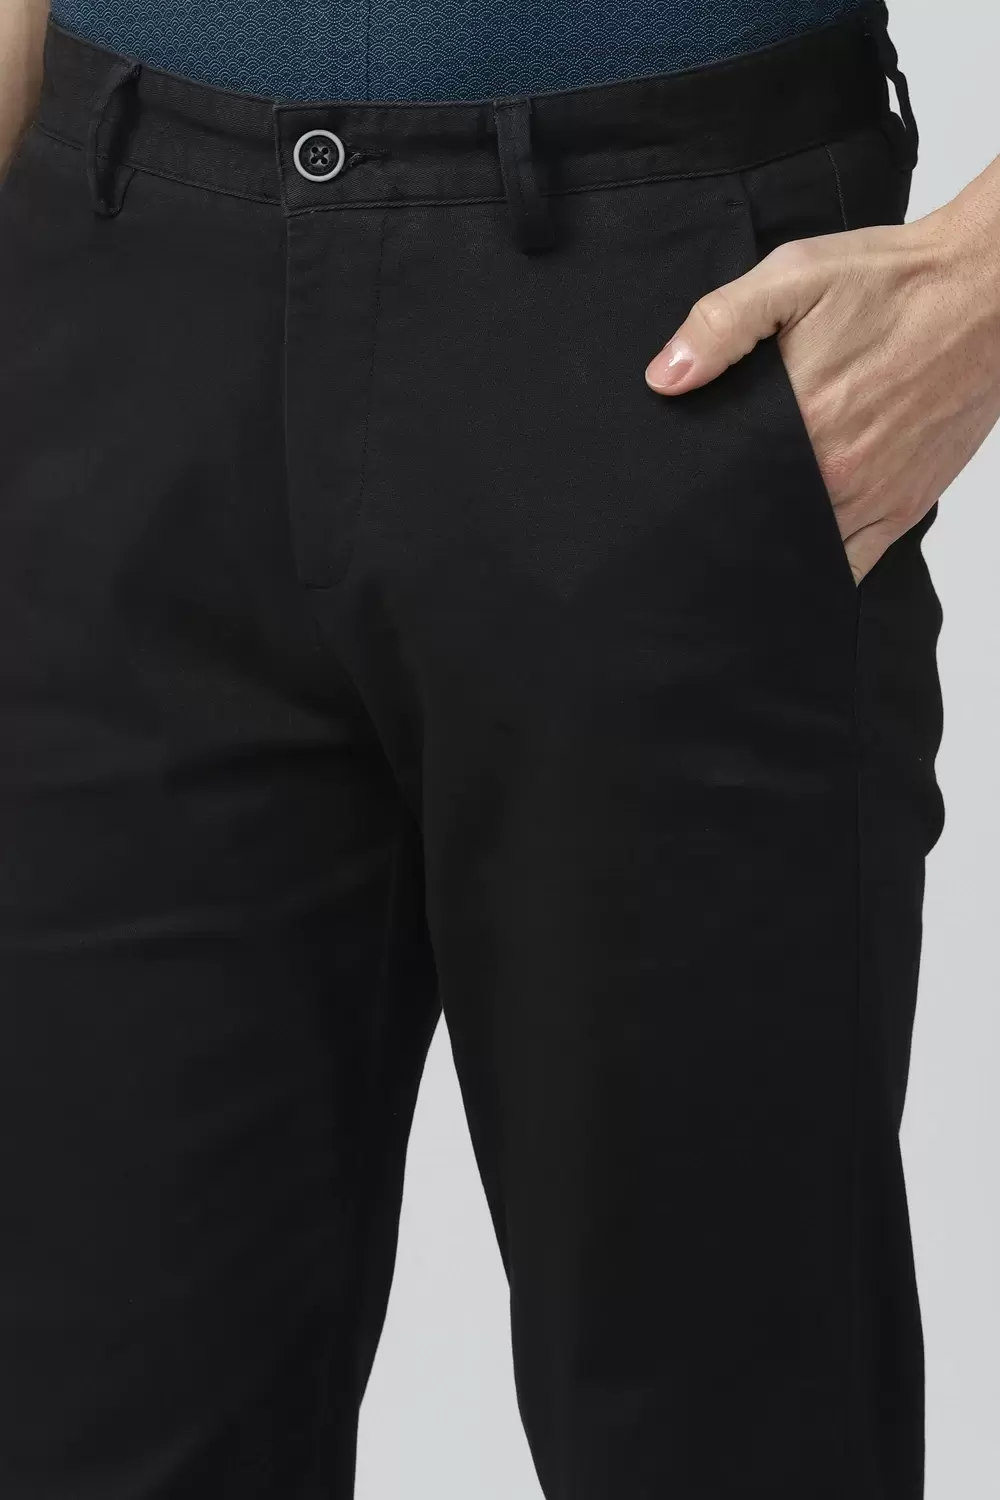 Buy Peter England Men Slim Fit Formal Trousers - Trousers for Men 22764430  | Myntra